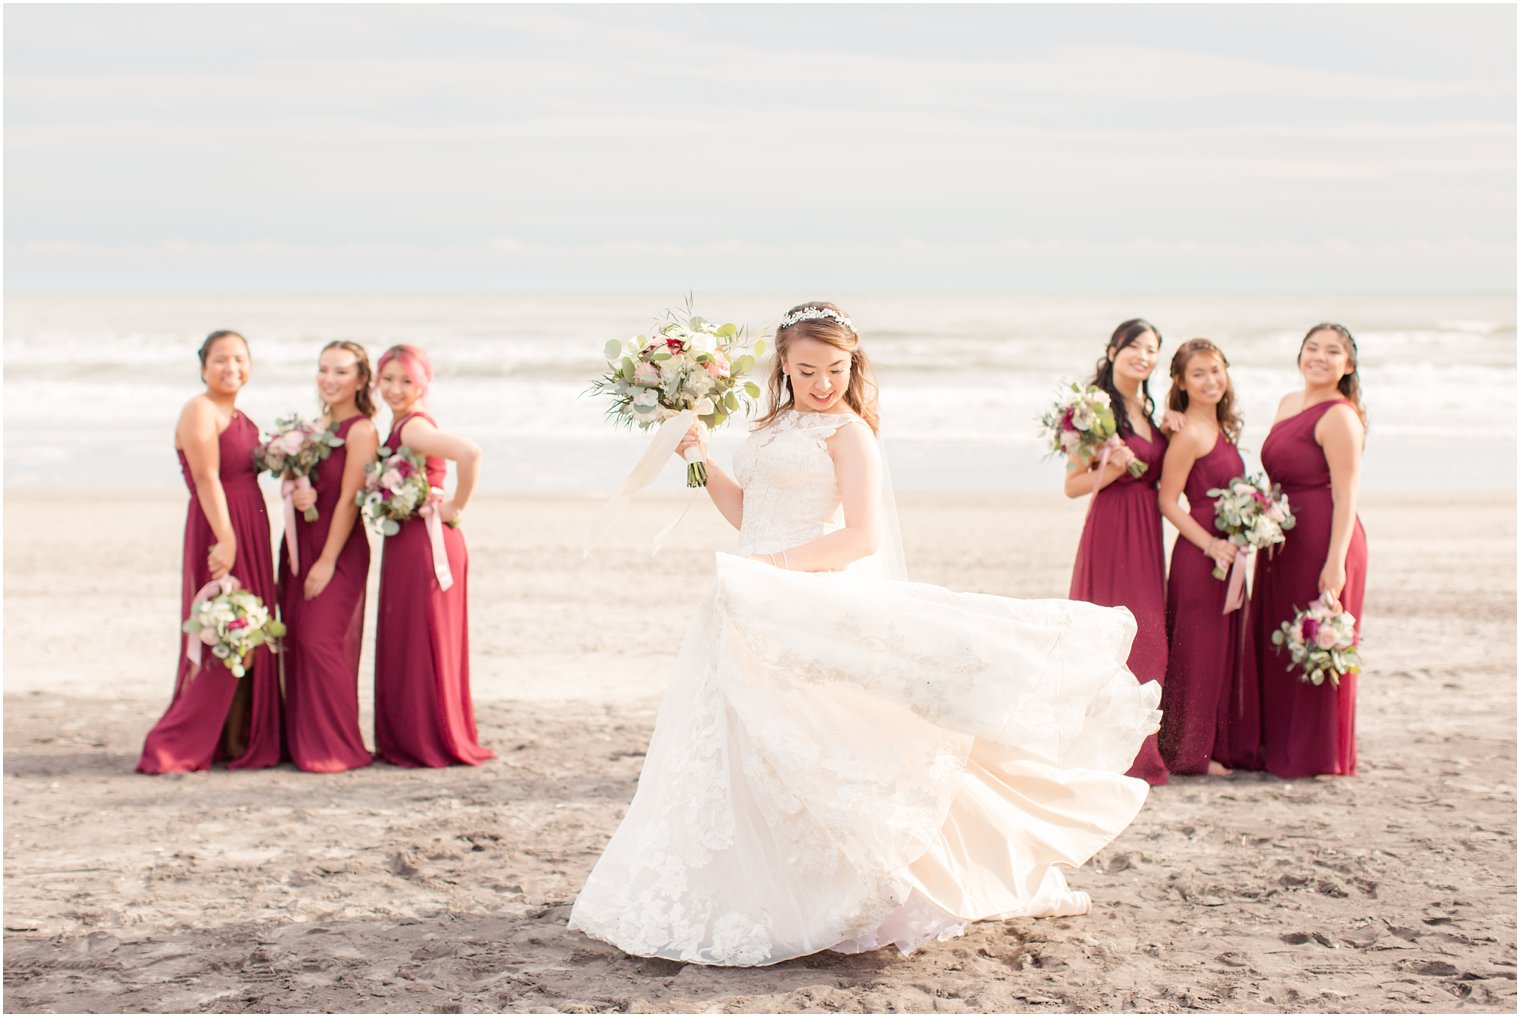 Bridesmaids on the beach wearing burgundy dresses